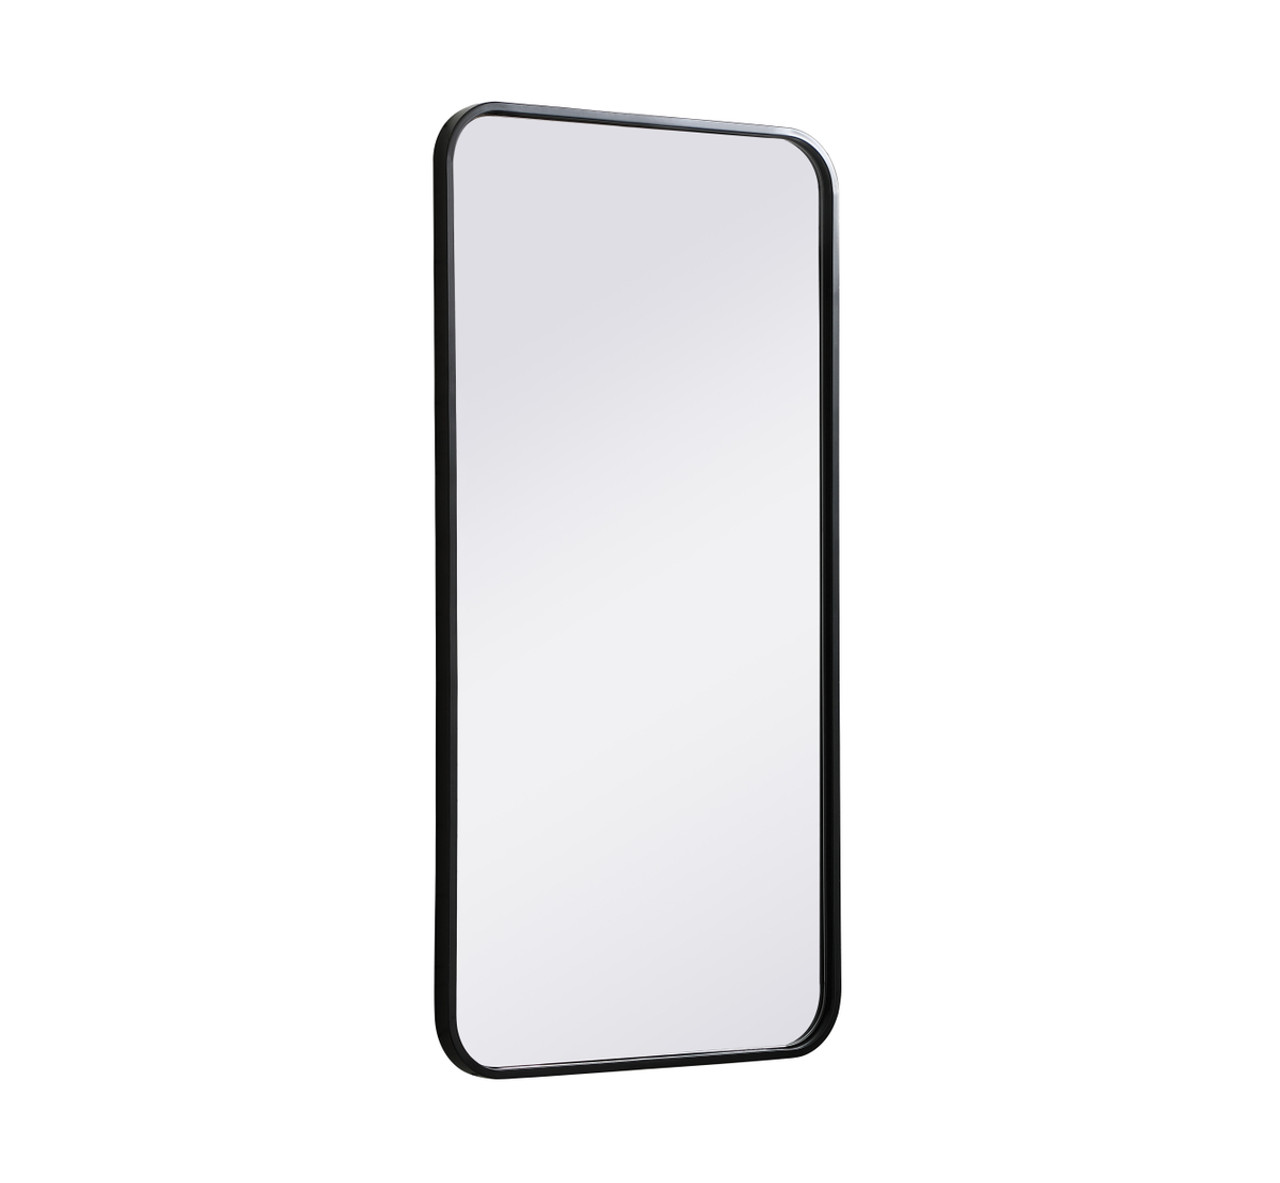 Elegant Decor MR801836BK Soft corner metal rectangular mirror 18x36 inch in Black